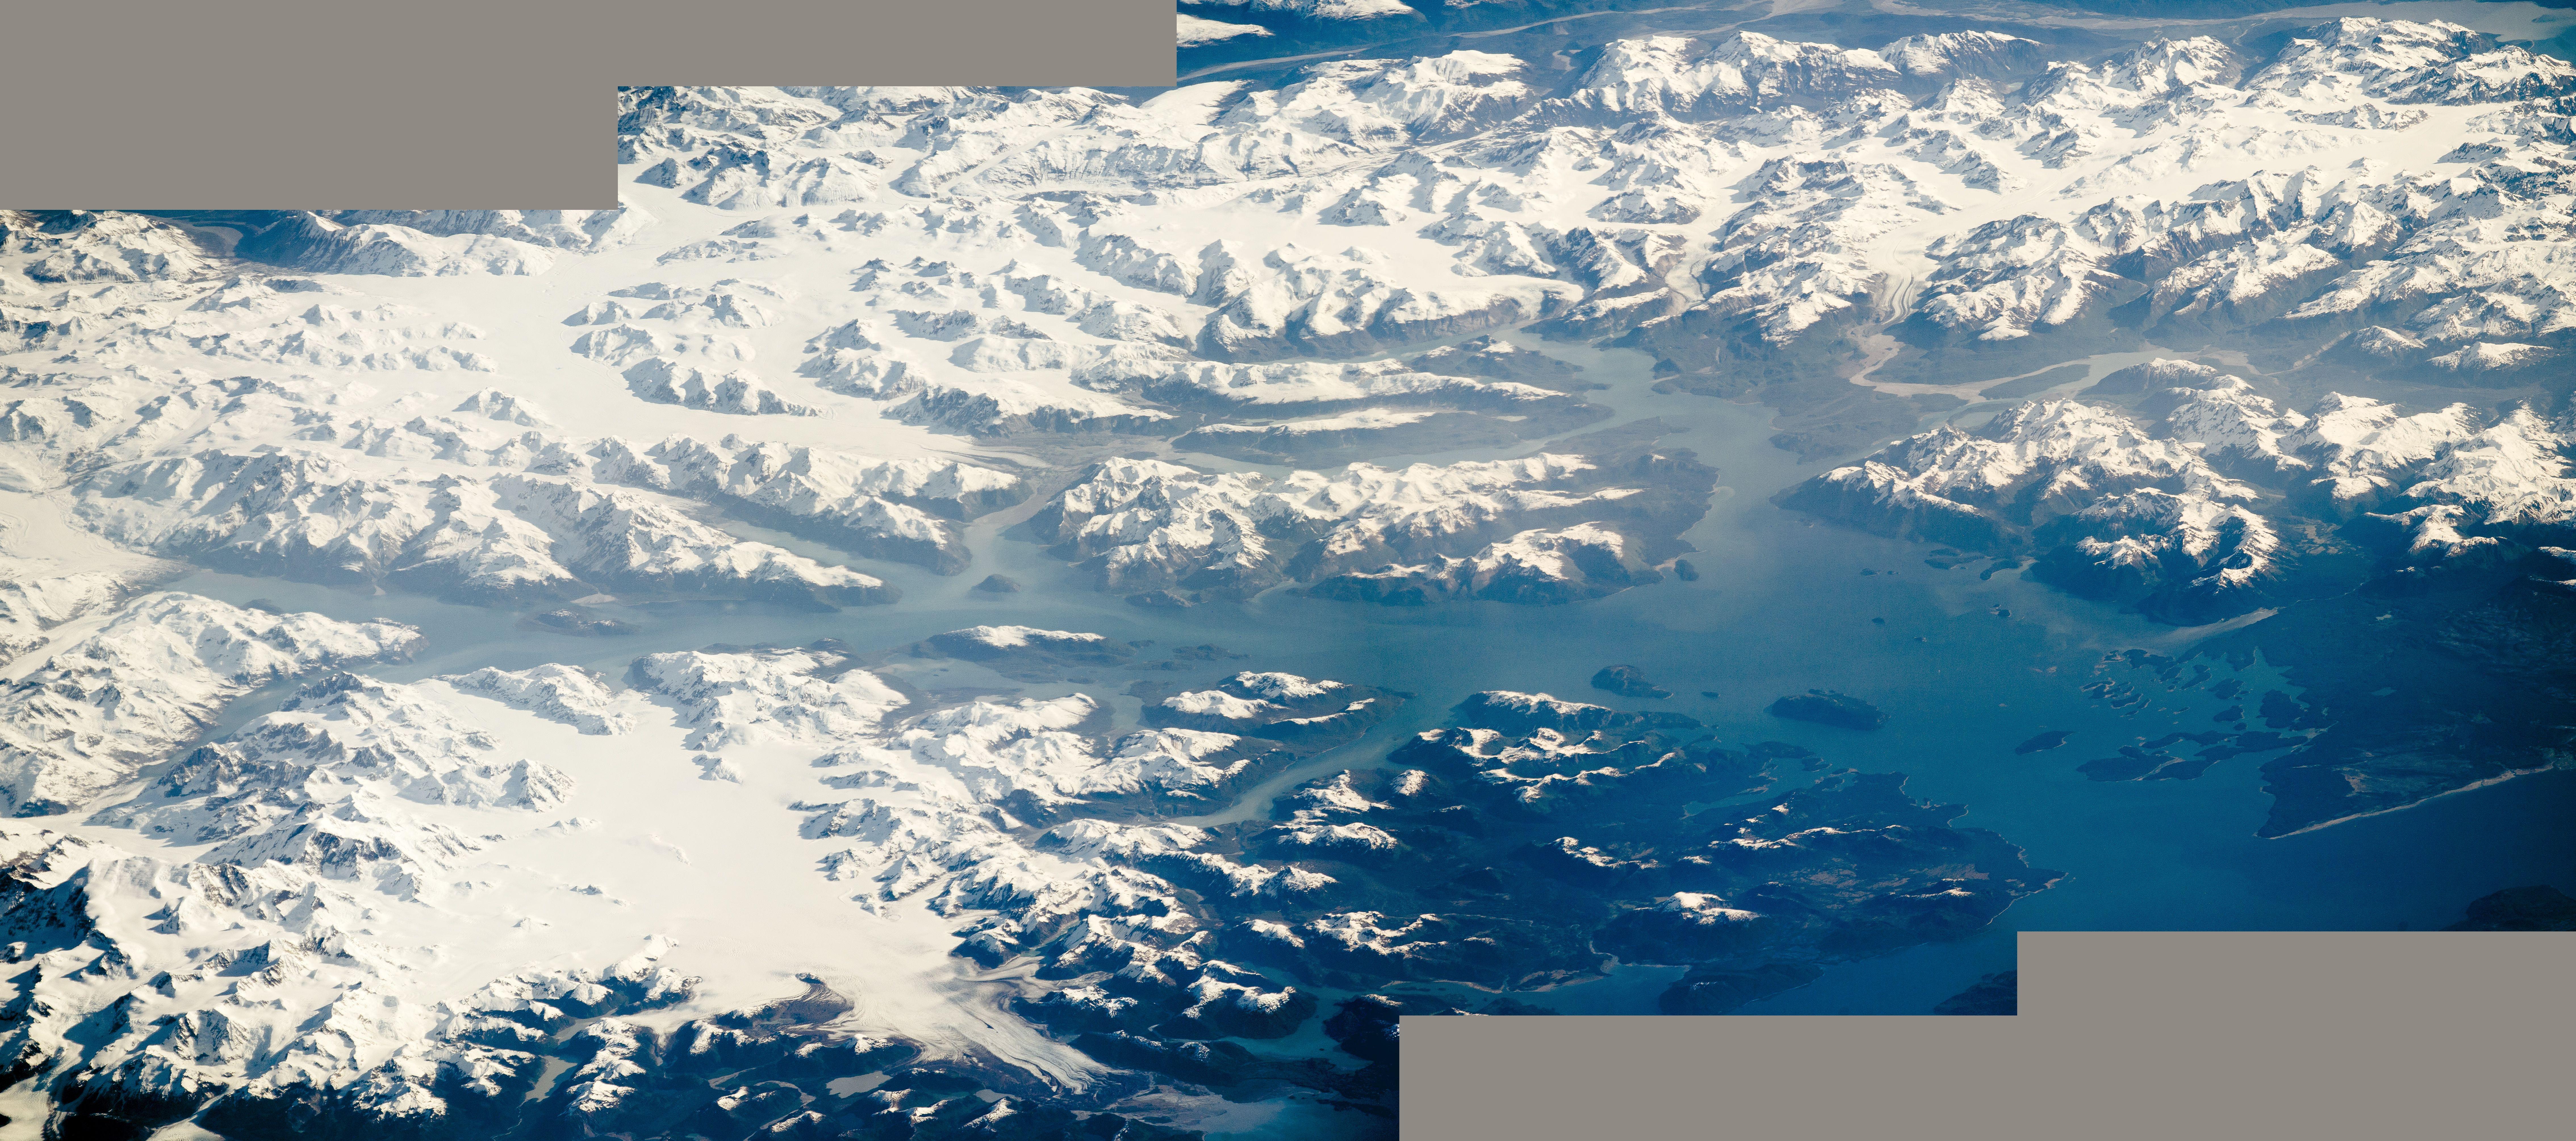 Glacier Bay National Park & Preserve, Image of